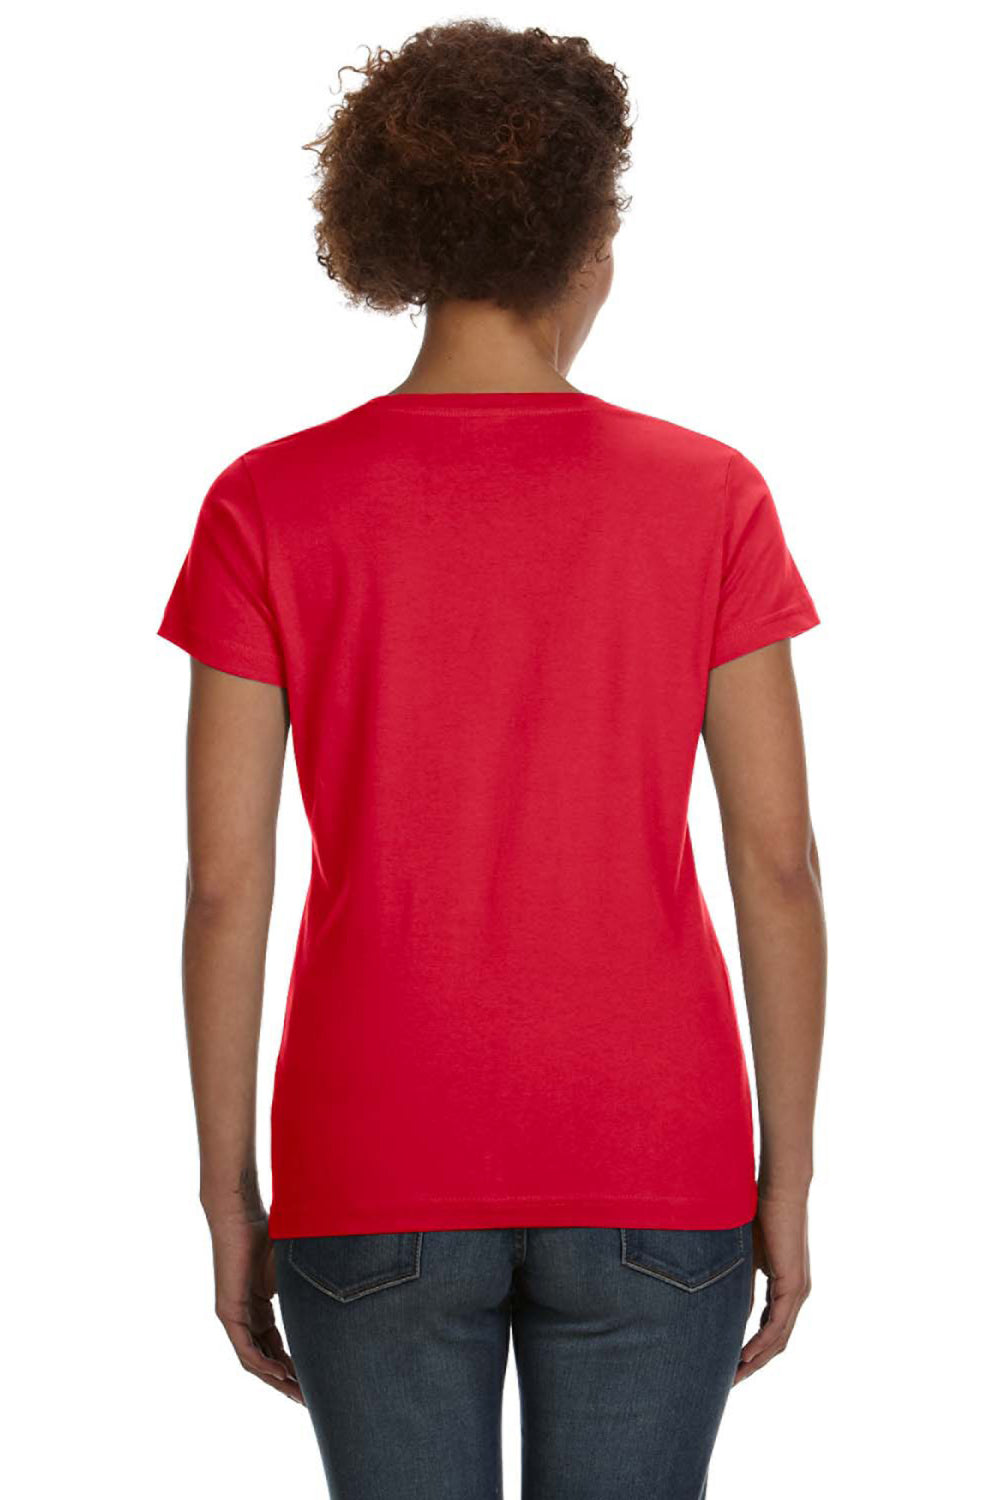 LAT 3507 Womens Fine Jersey Short Sleeve V-Neck T-Shirt Red Back